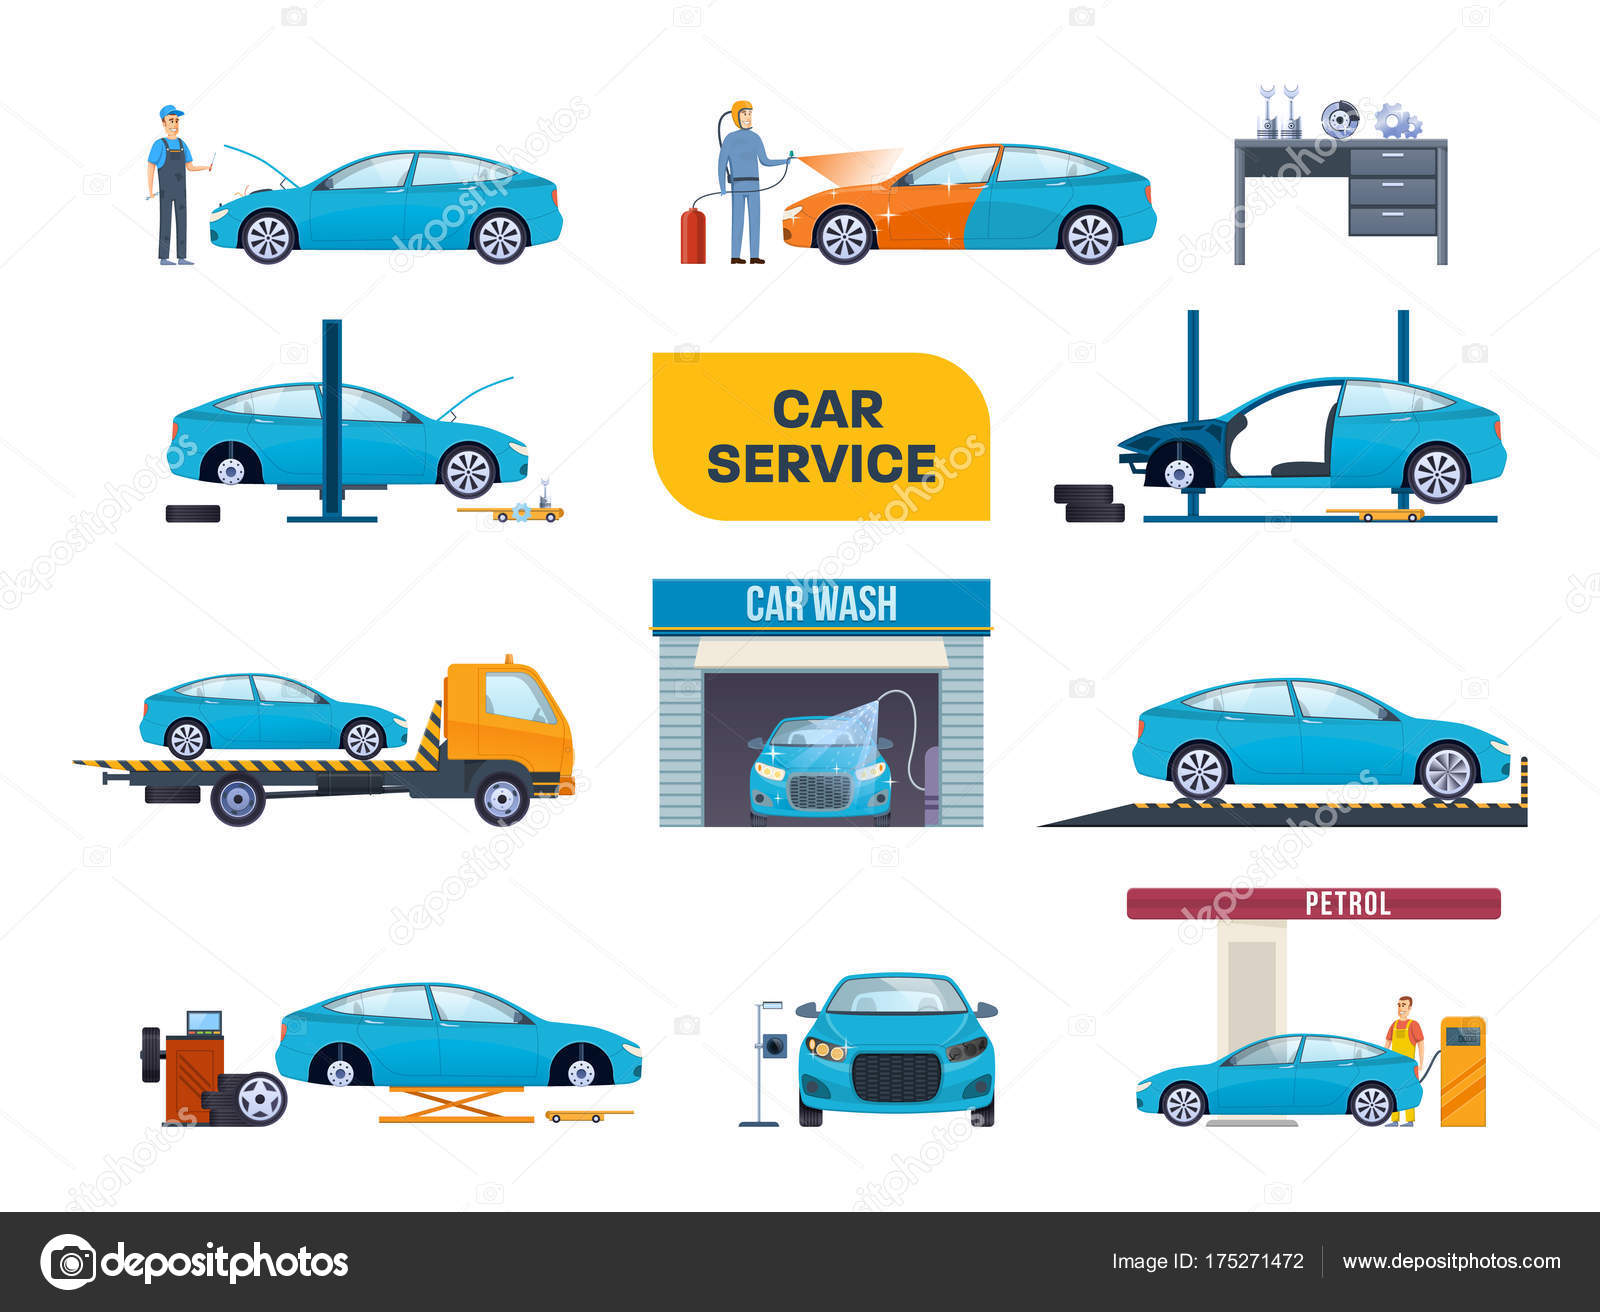 https://st3.depositphotos.com/3991093/17527/v/1600/depositphotos_175271472-stock-illustration-set-of-car-service-car.jpg